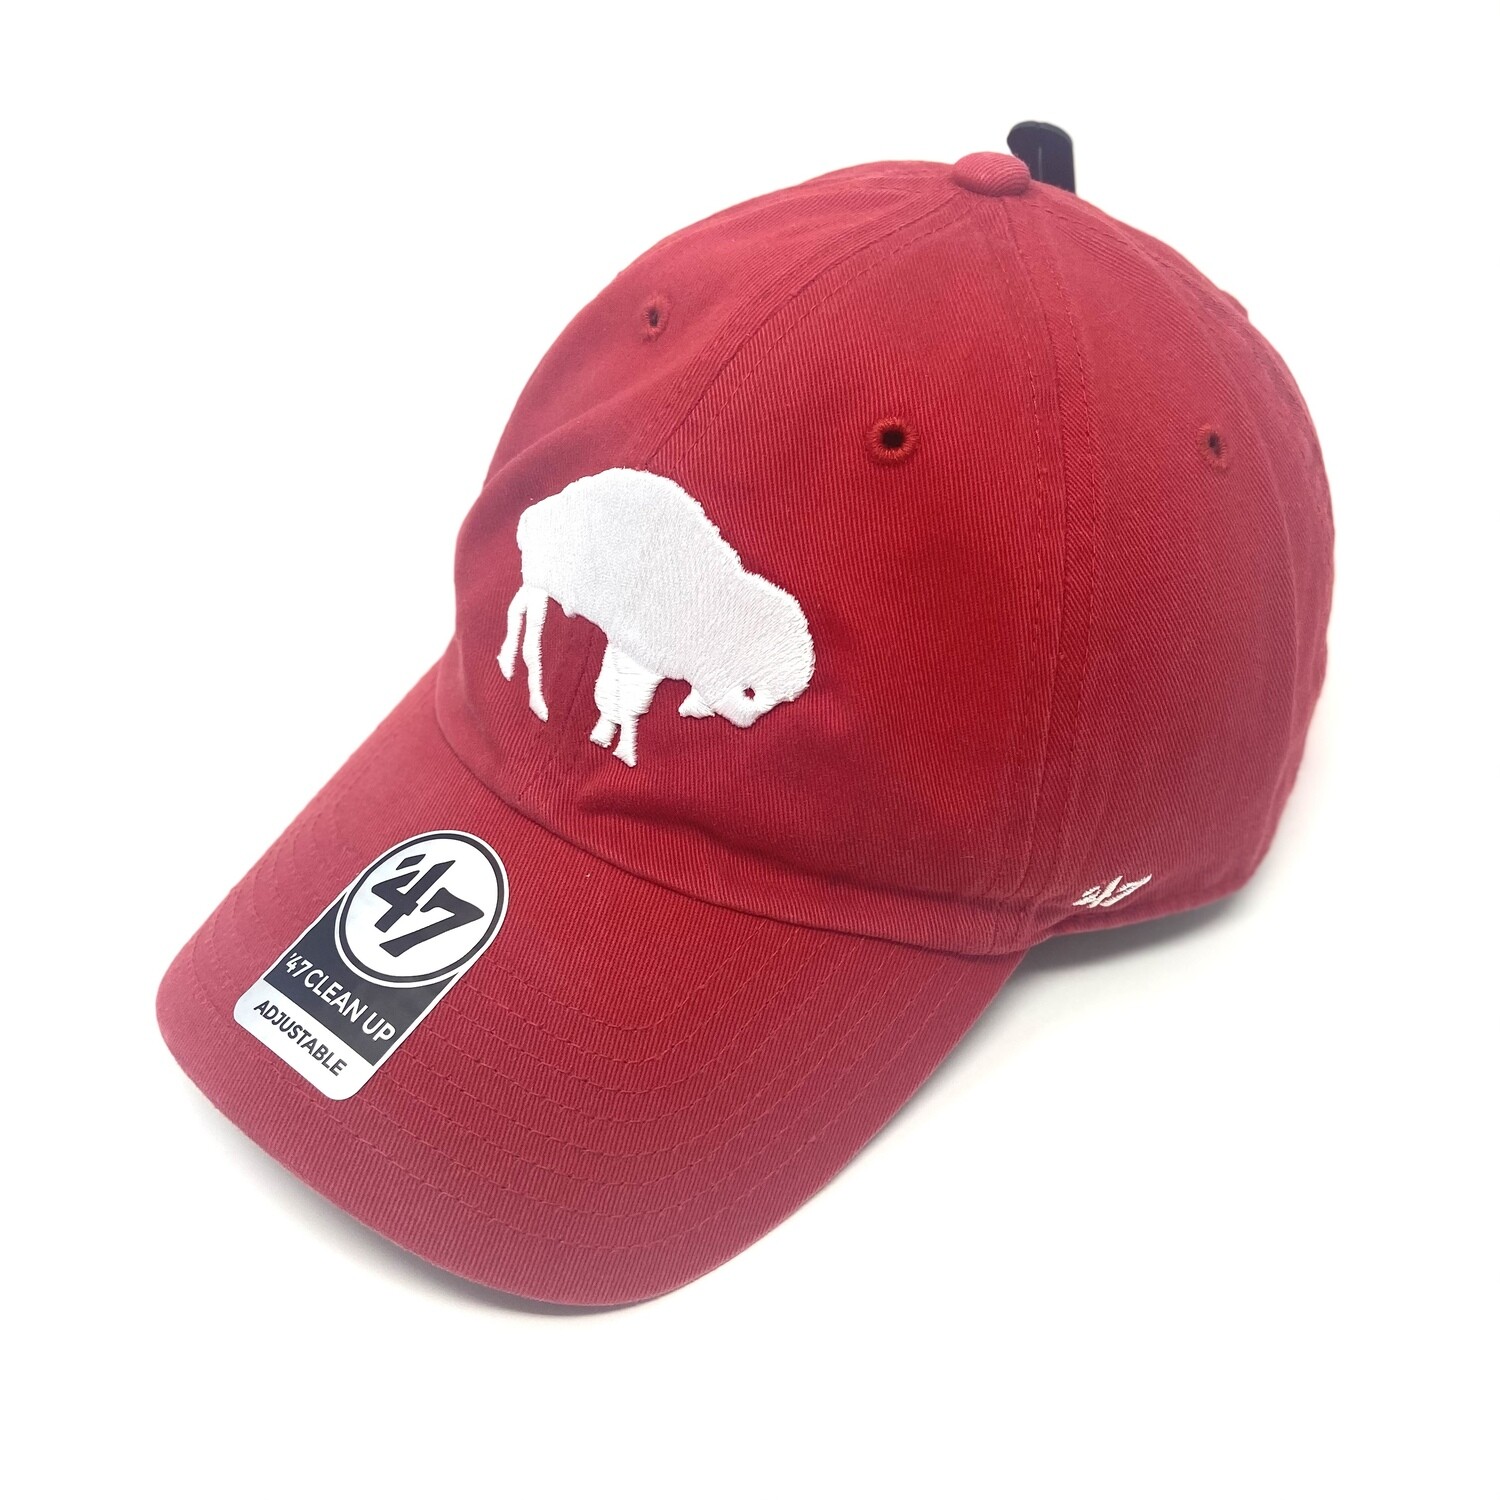 Buffalo Bills '47 Brand Hats